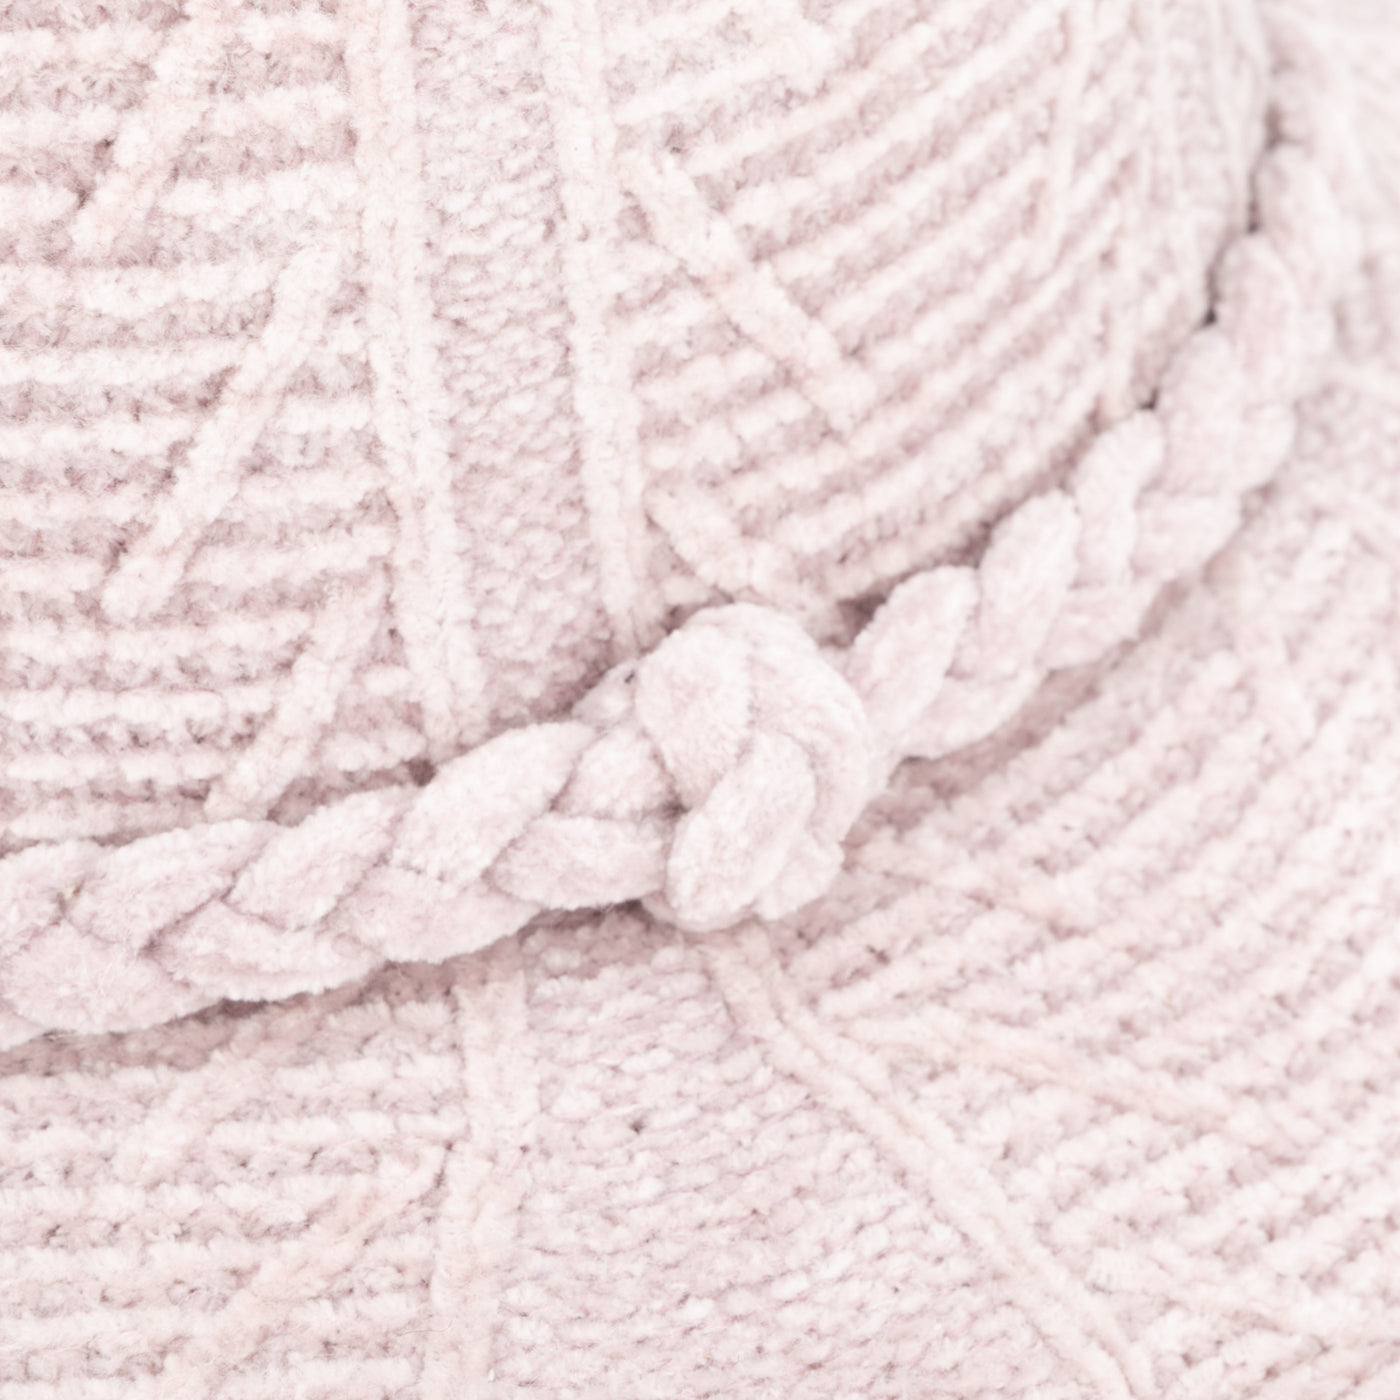 FEDORA - Women's Chenille Patterned Knit